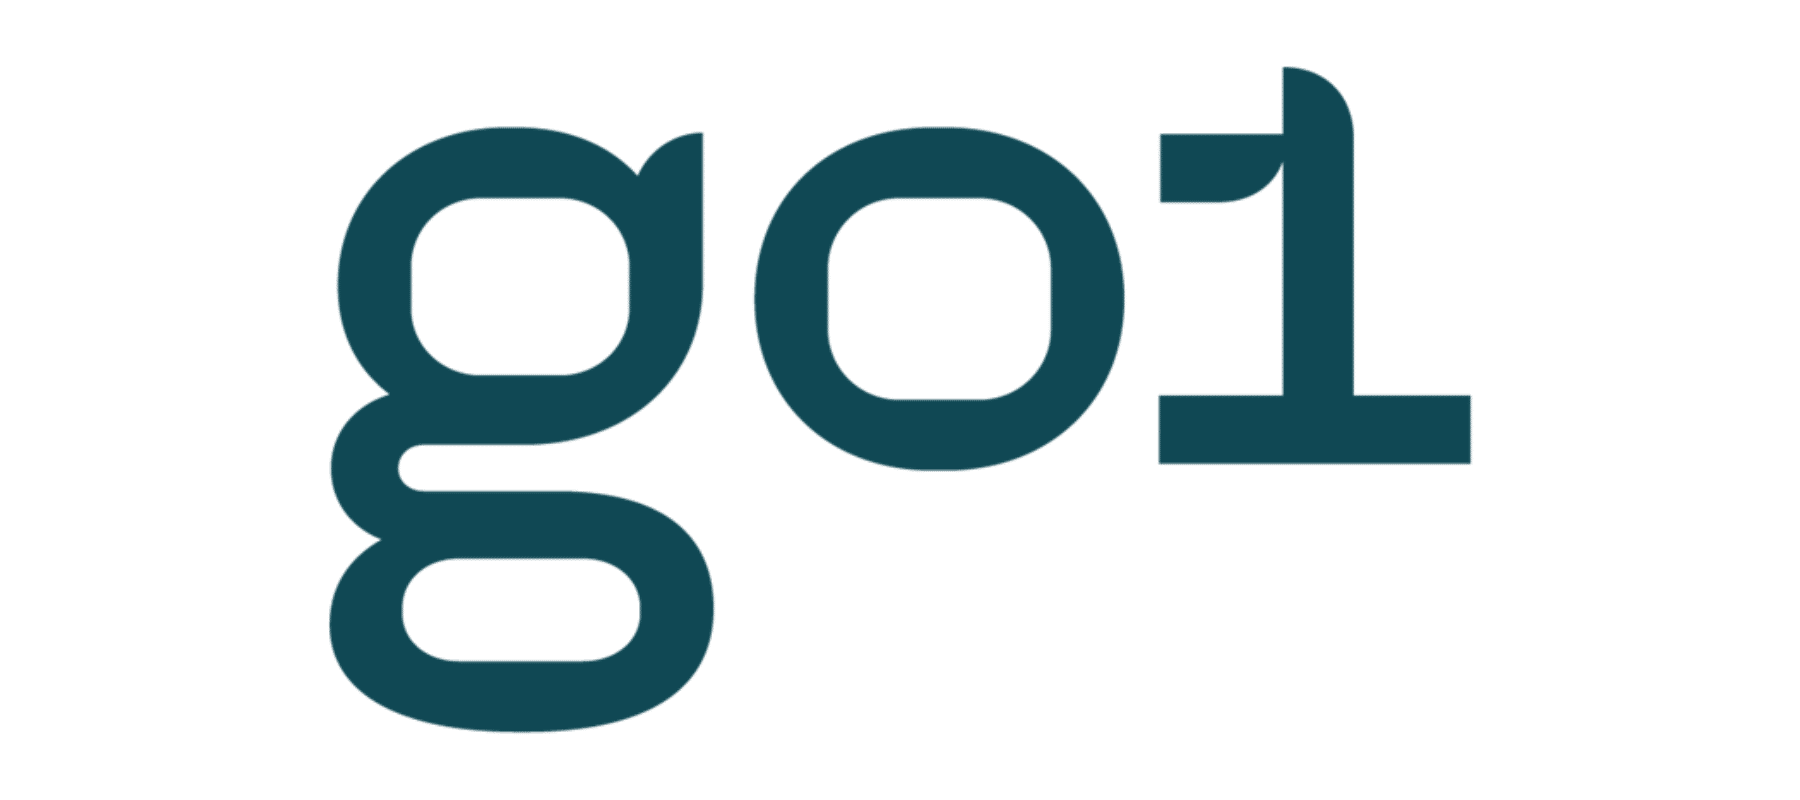 Go1 logo HRH training